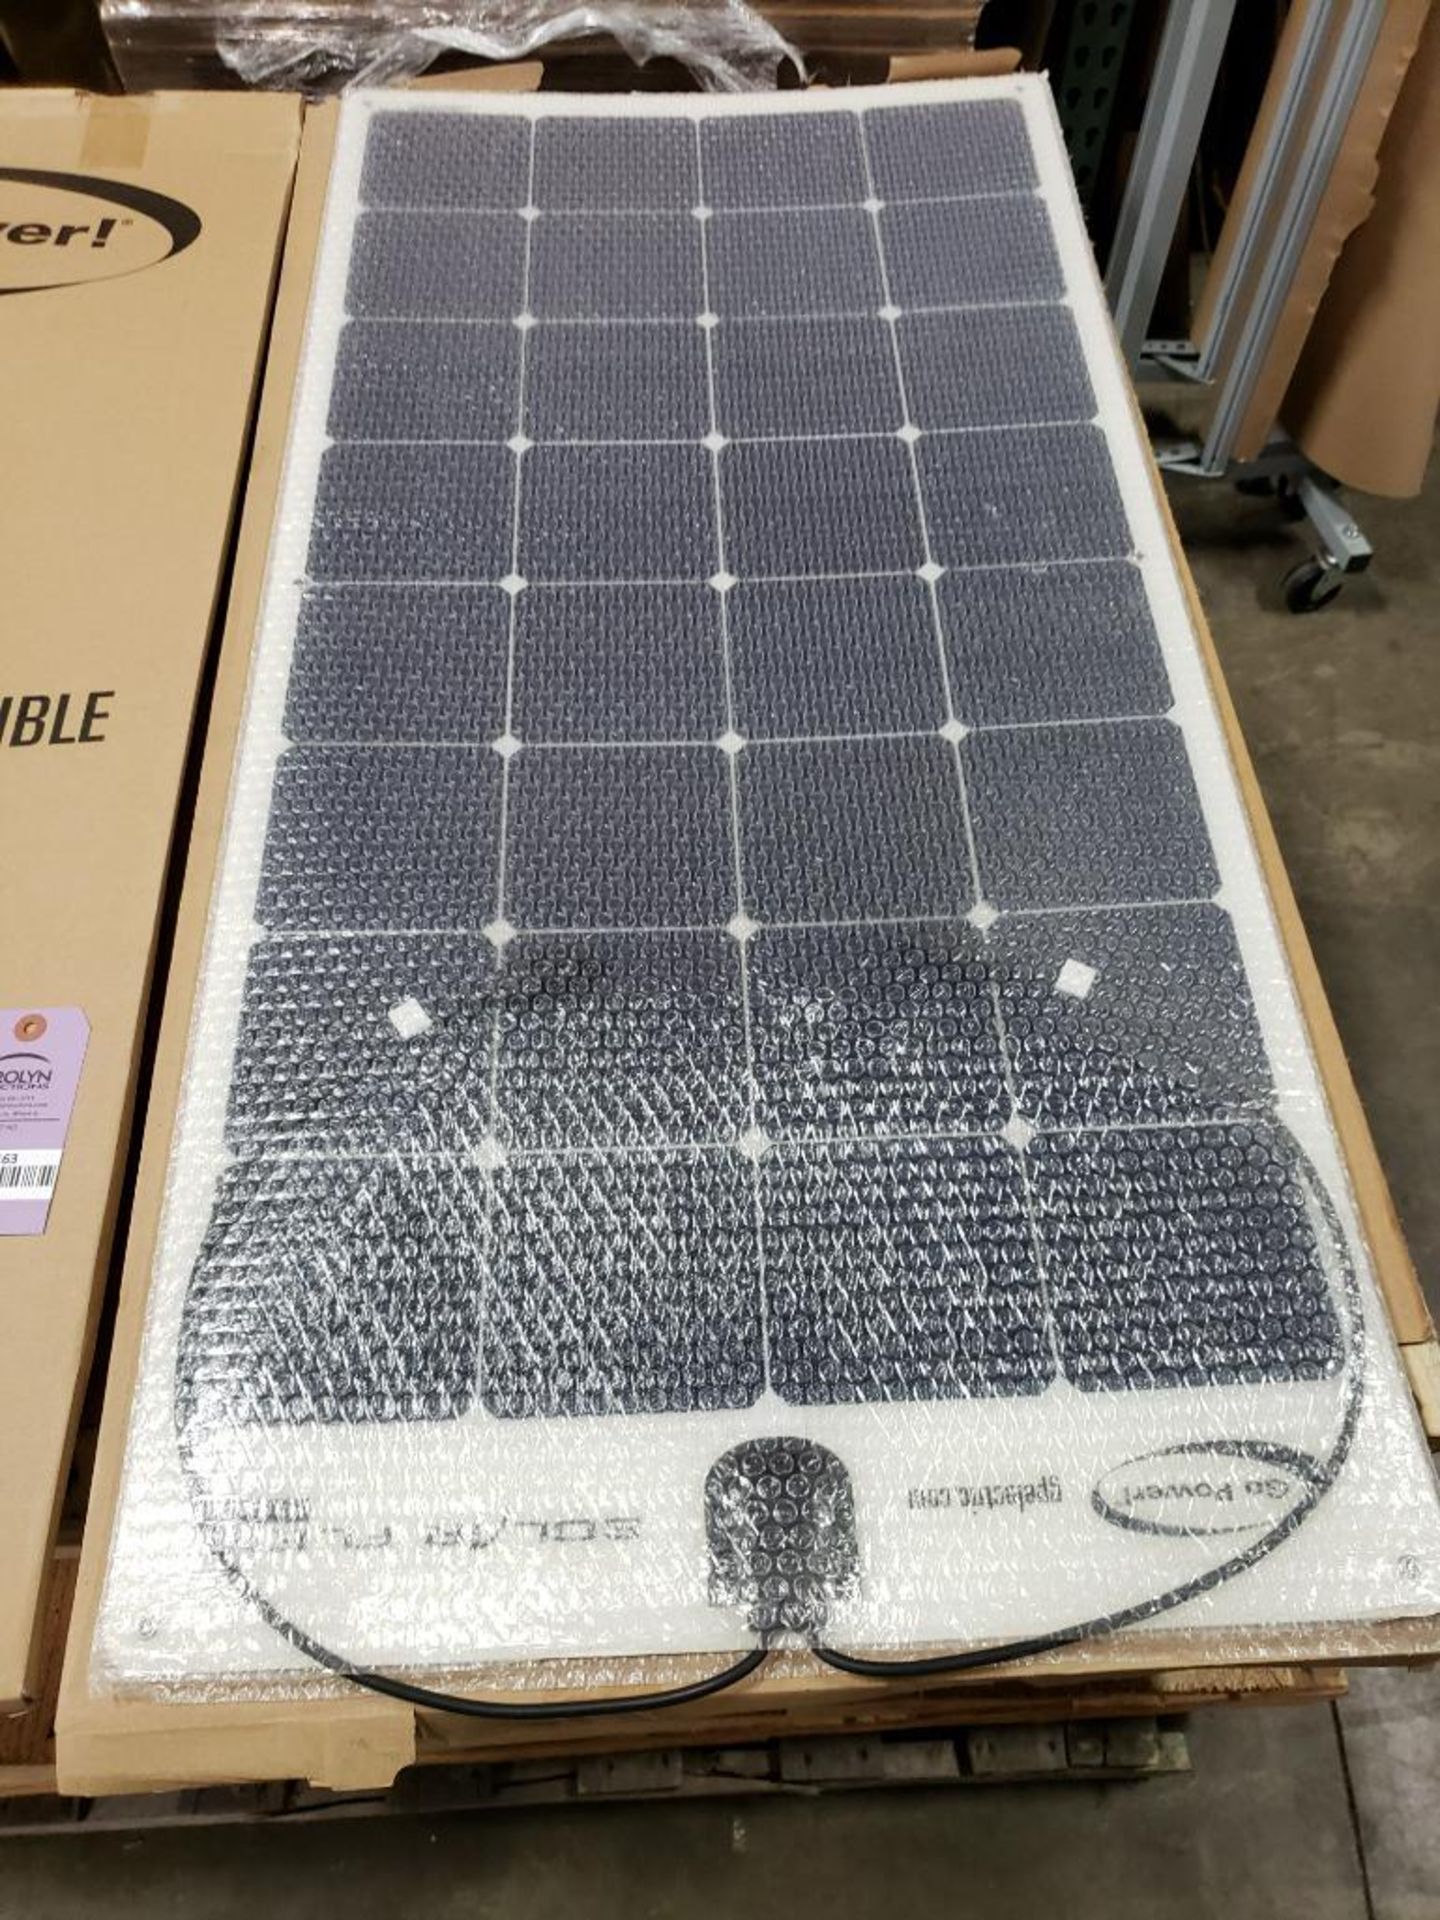 Qty 2 - Go Power 100w flexible solar panel. Model Flex-100. - Image 3 of 4